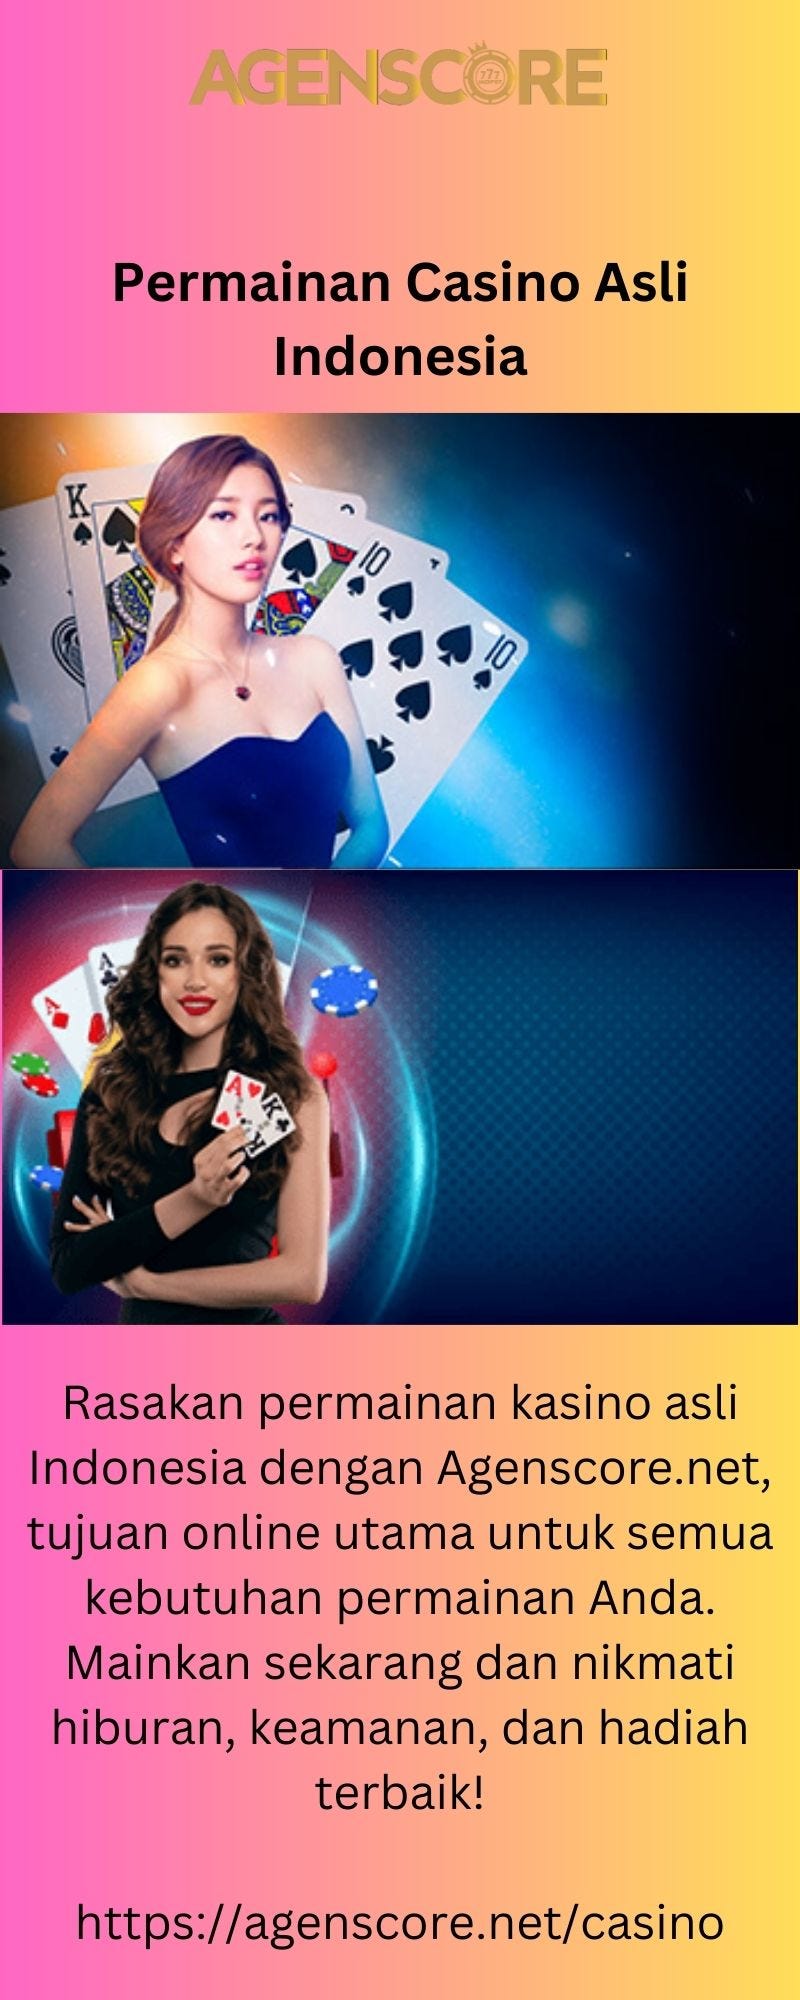 Permainan Casino Asli Indonesia - Agenscore Core - Medium